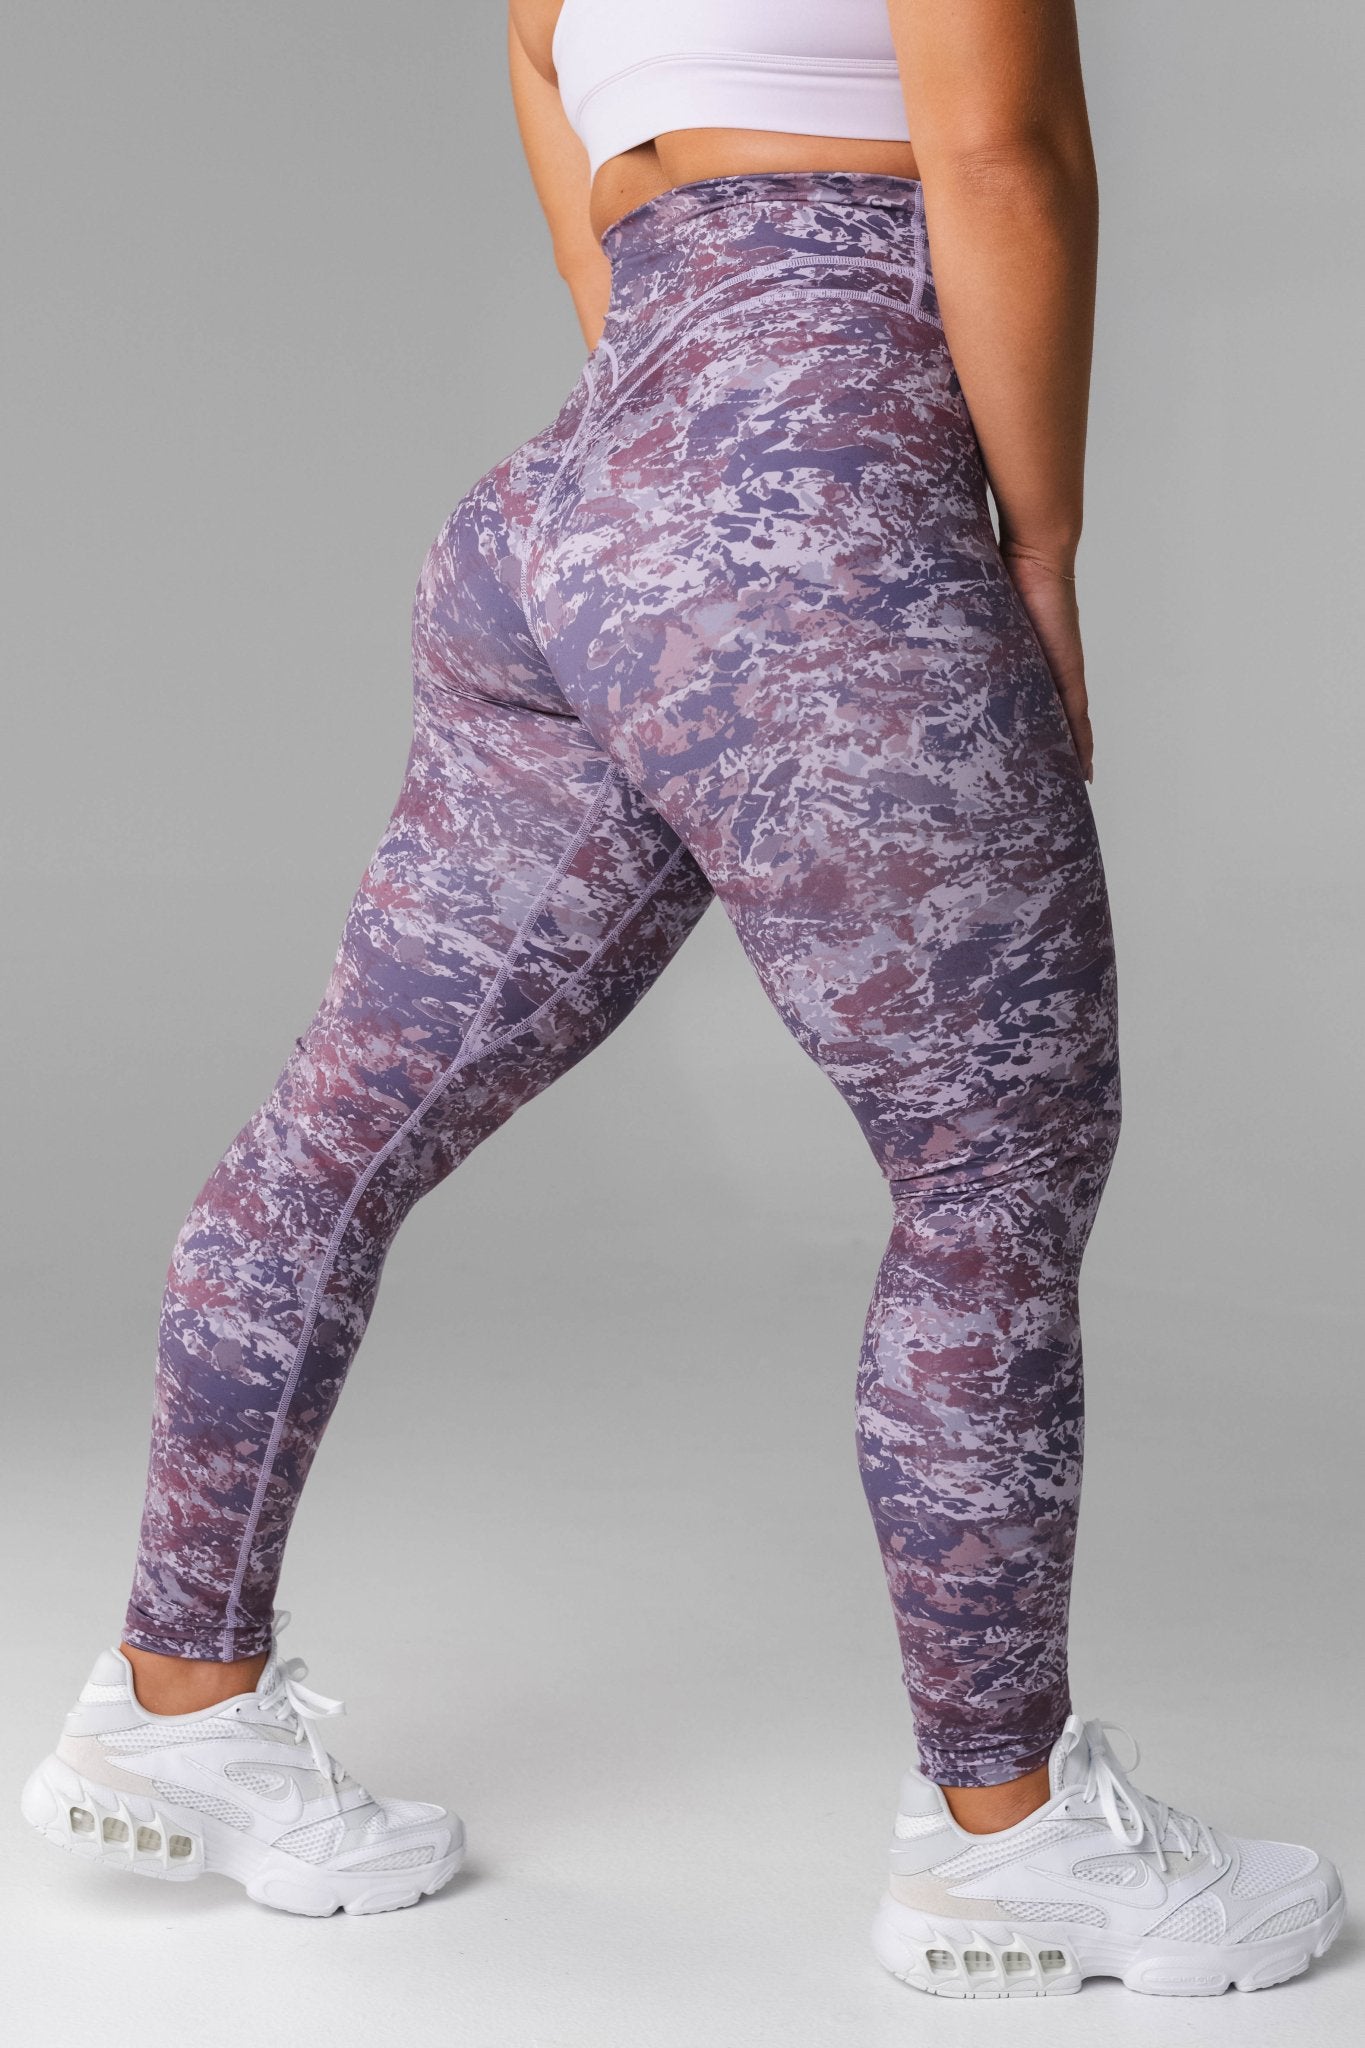 Women's Pack Of 3 Plus Size Leggings Purple/gold Paisley, Purple/fuchsia  Paisley, Grey/pink Argyle One Size Fits Most Plus - White Mark : Target